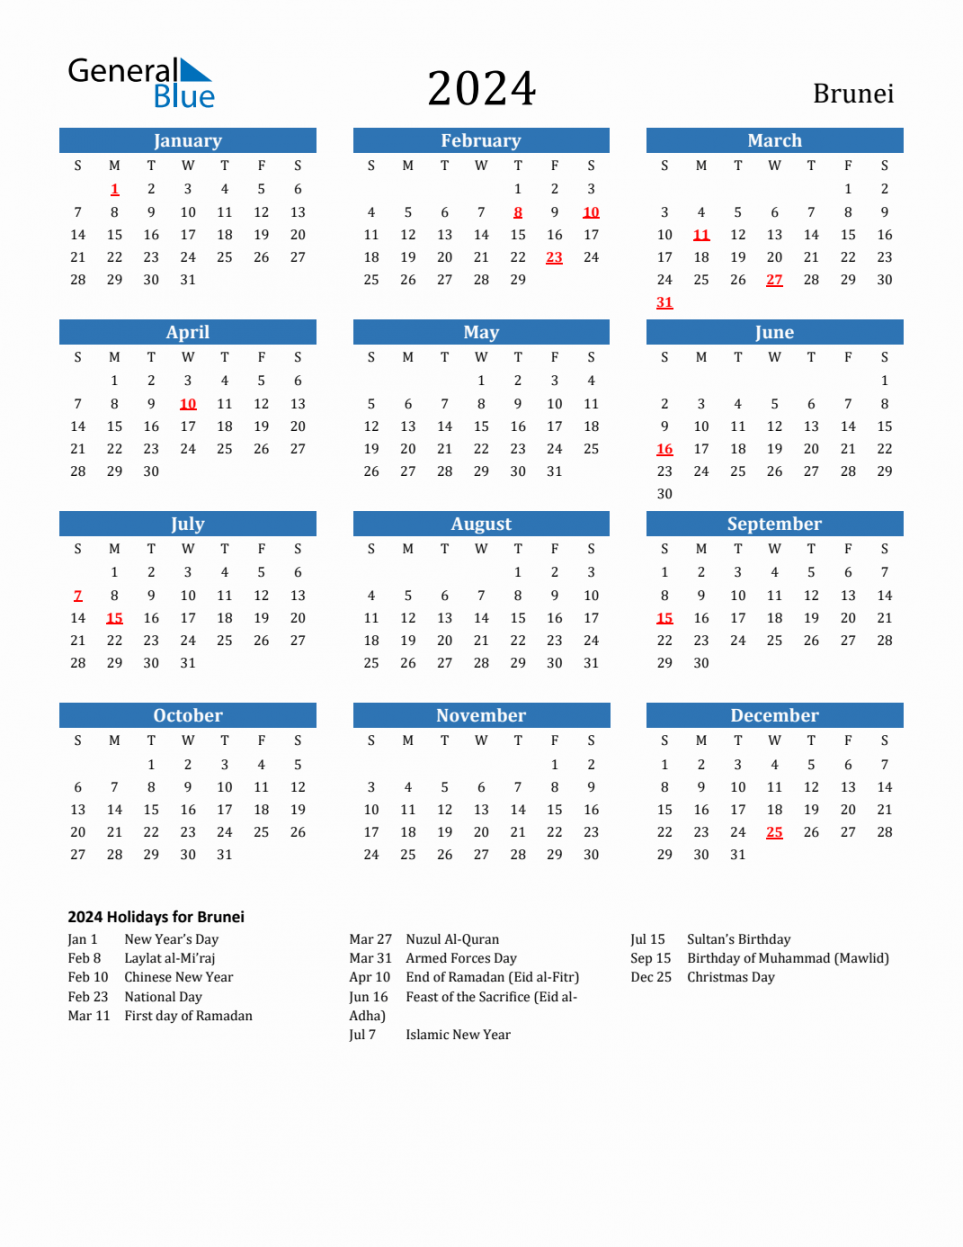 Brunei Calendar with Holidays